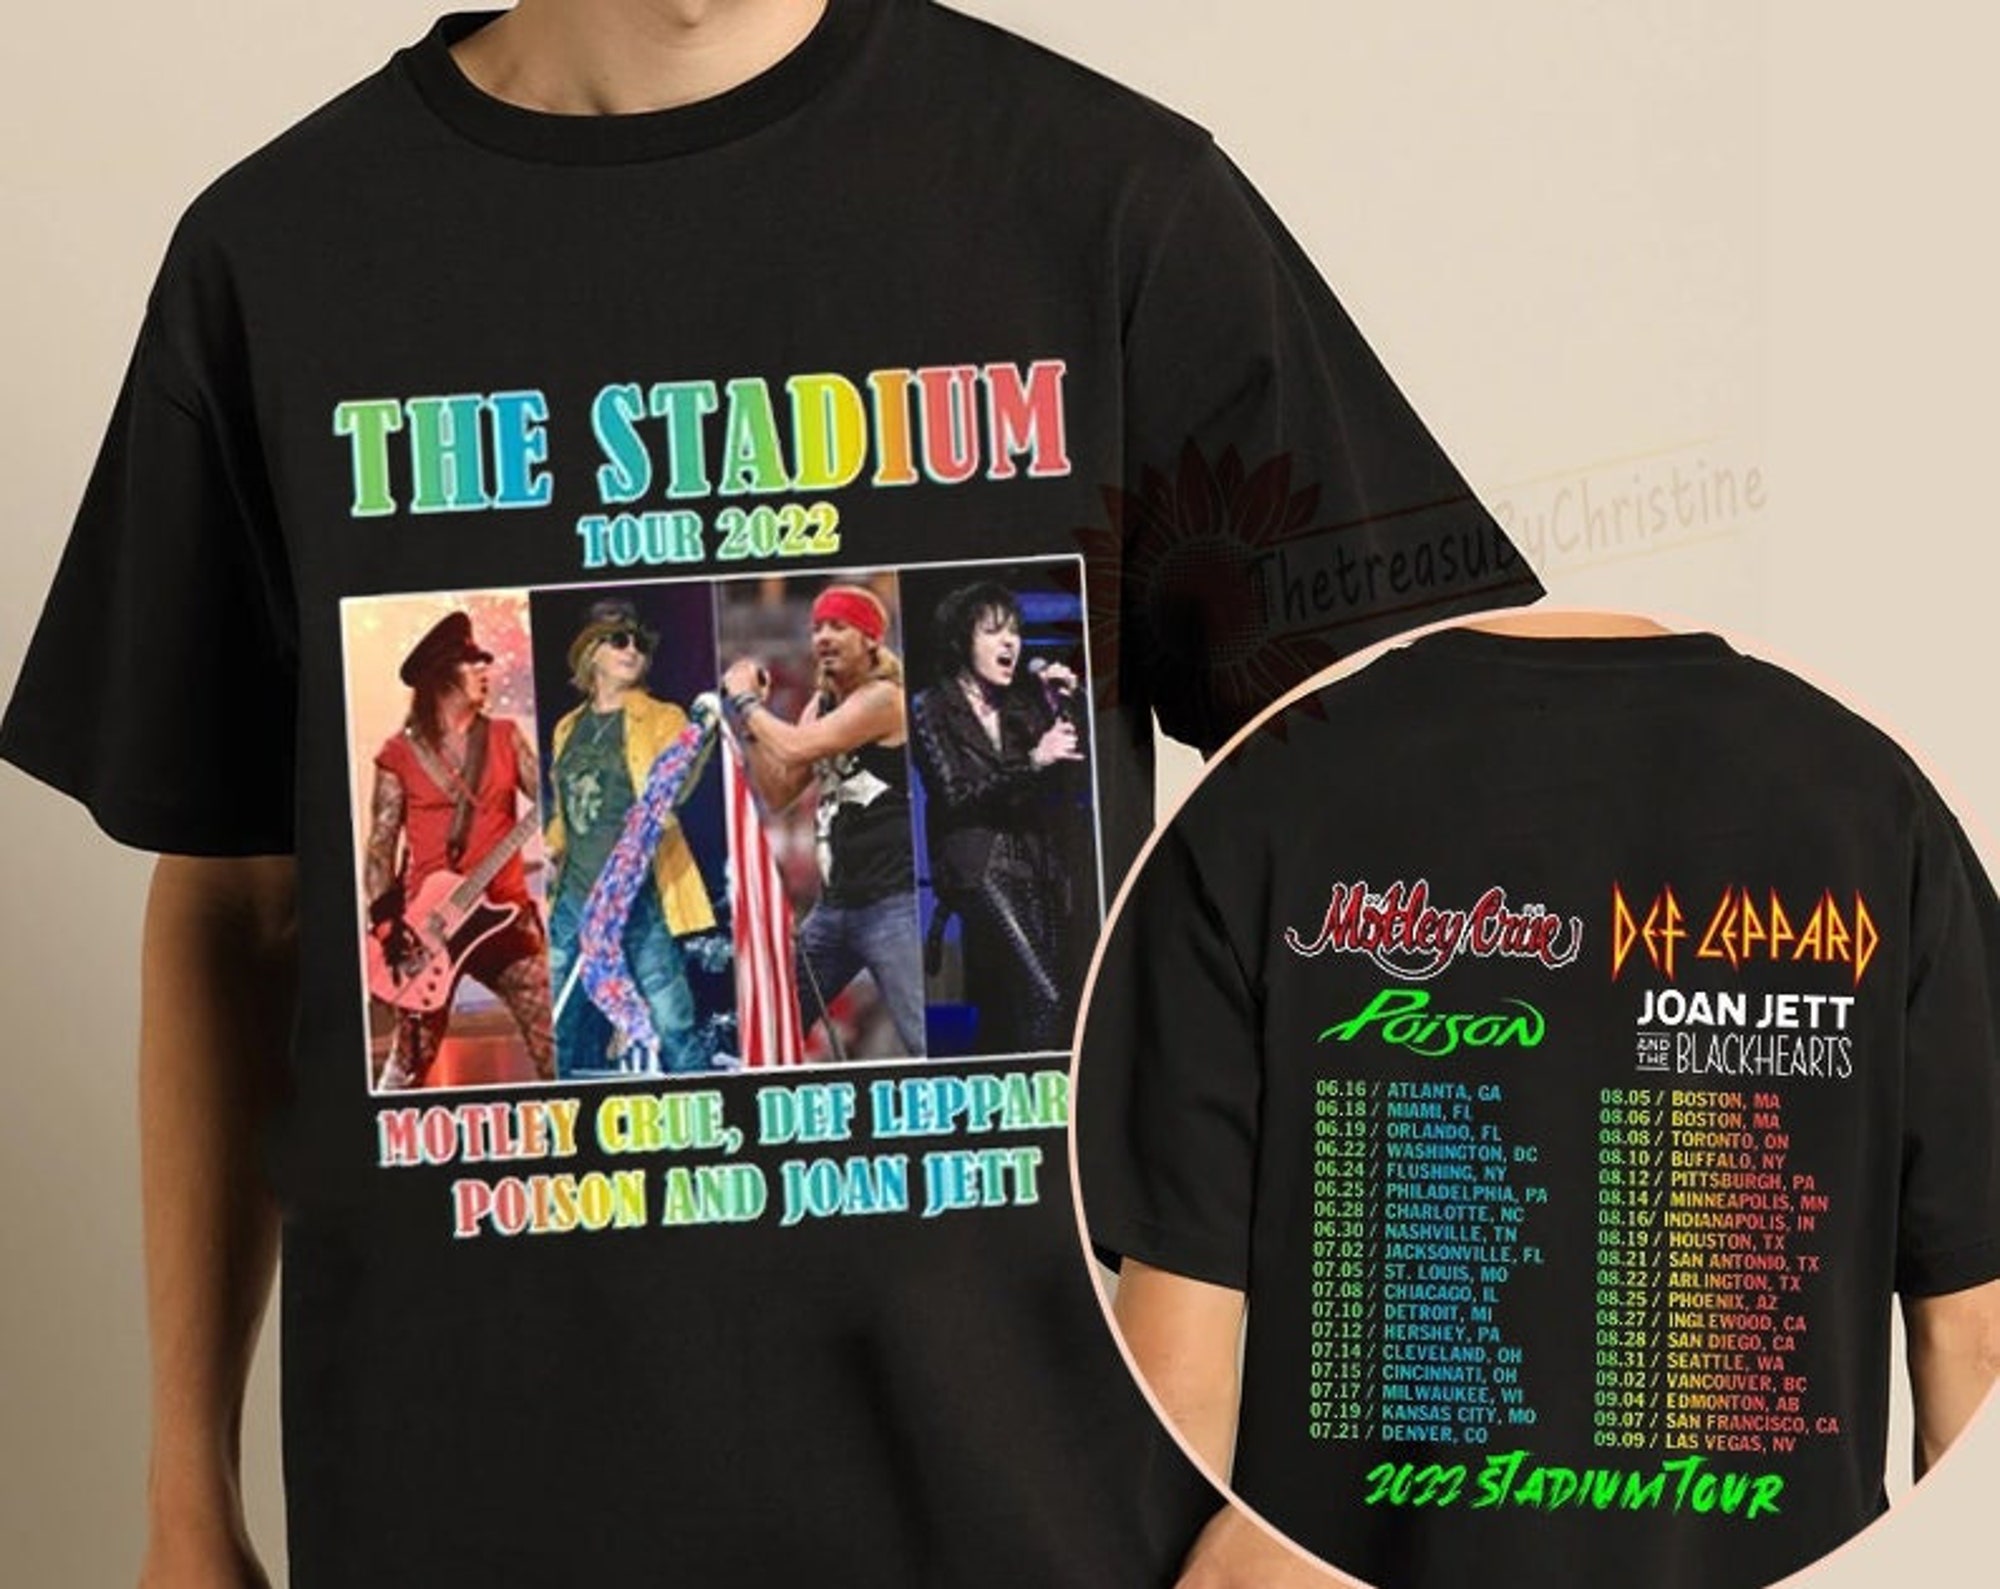 The Stadium Tour Motley Crue Def Leppard Poison Joan Jett & The Blackhearts Shirt, Motley Crue Shirt